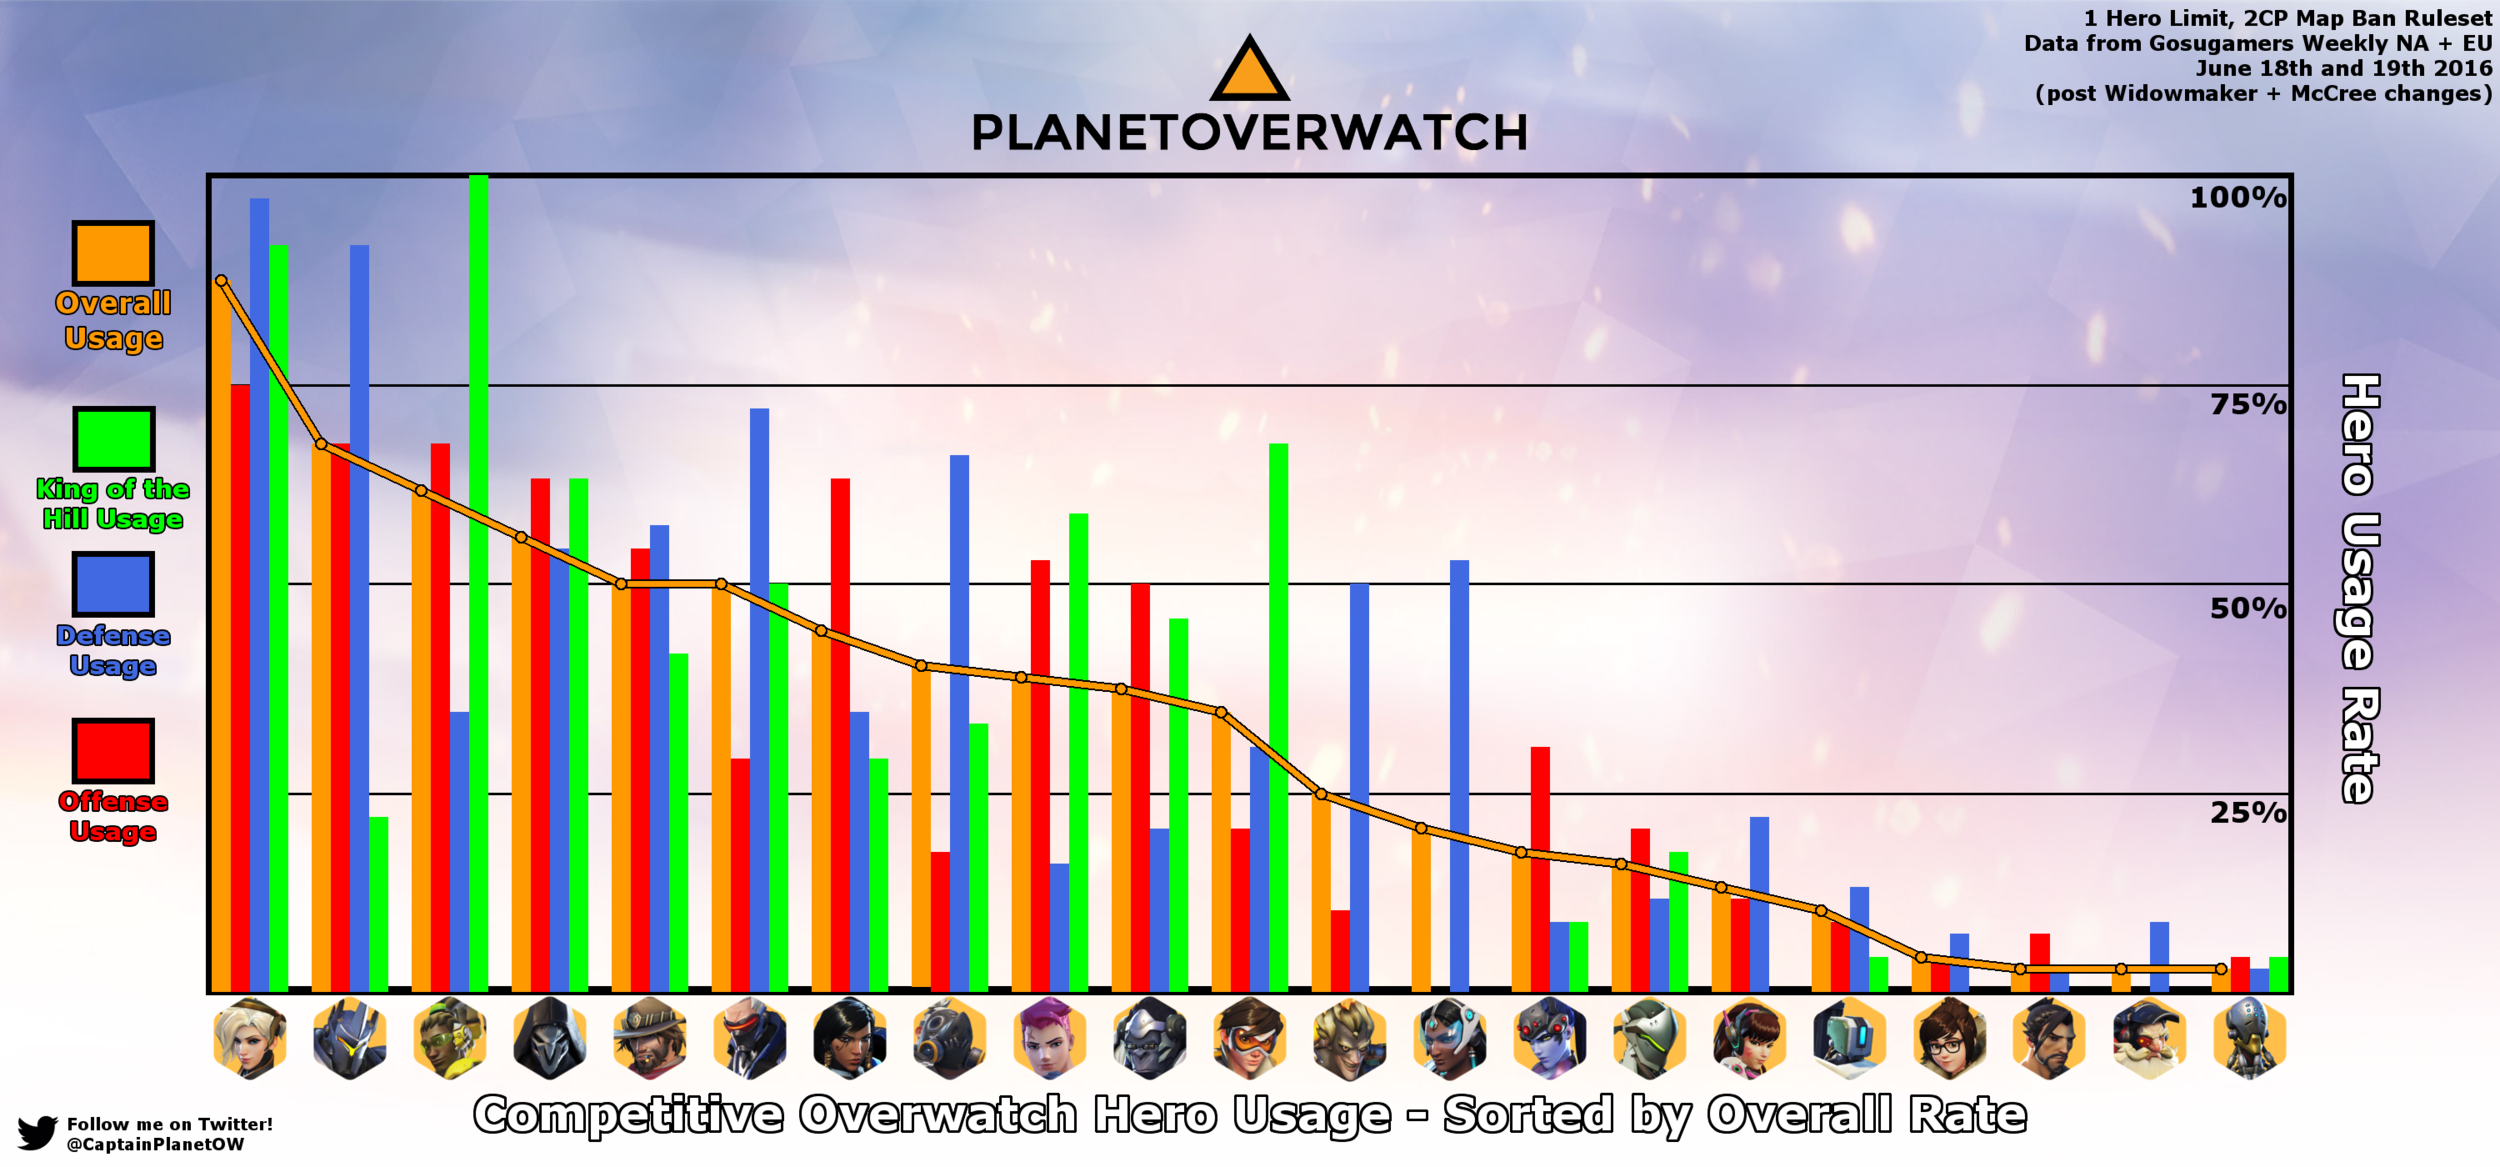 Overwatch Counter Chart